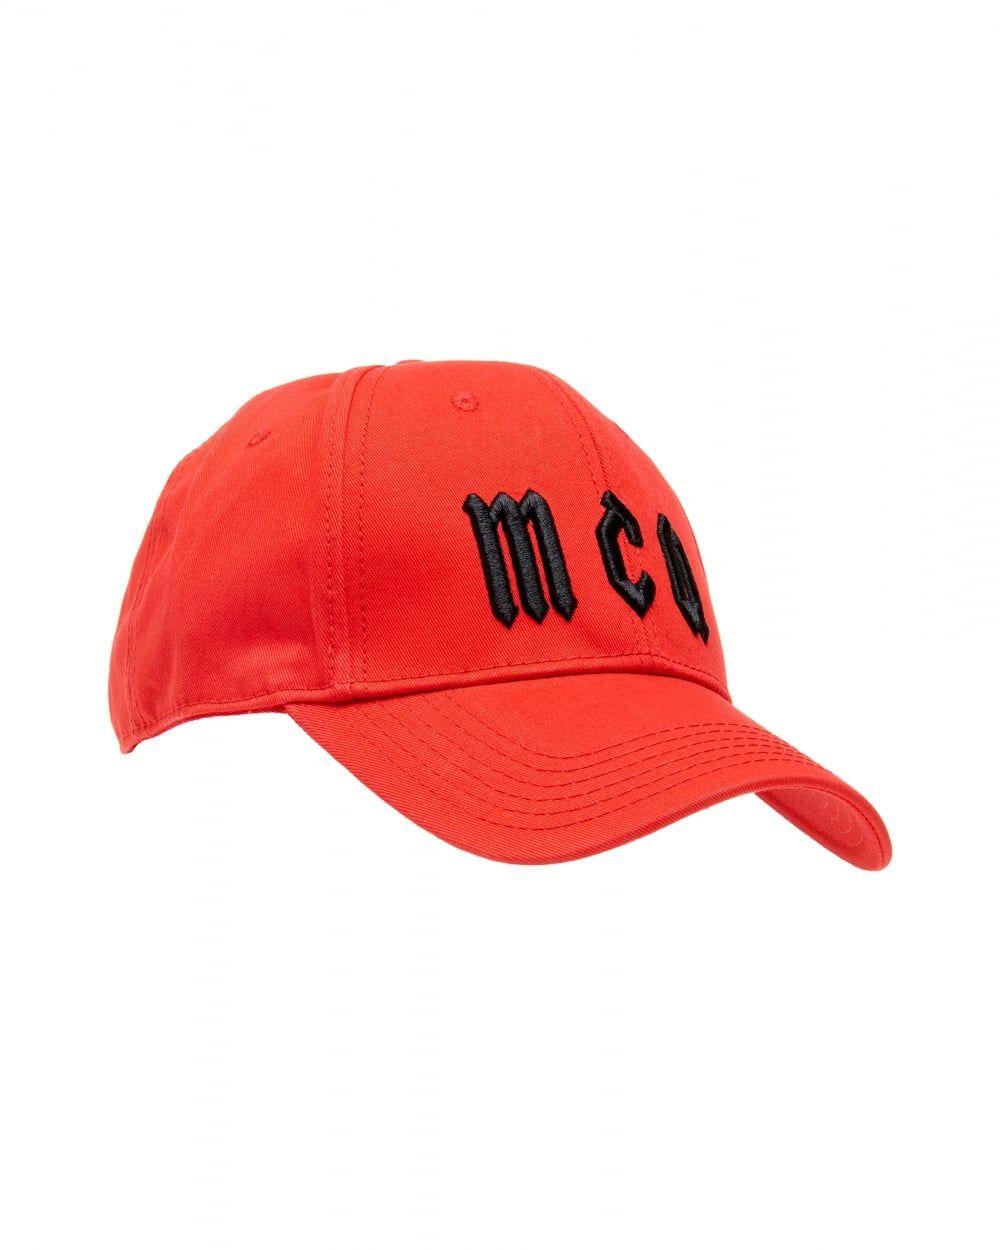 Red Cap Logo - McQ by Alexander McQueen Mens Logo Baseball Hat, Red Cotton Cap